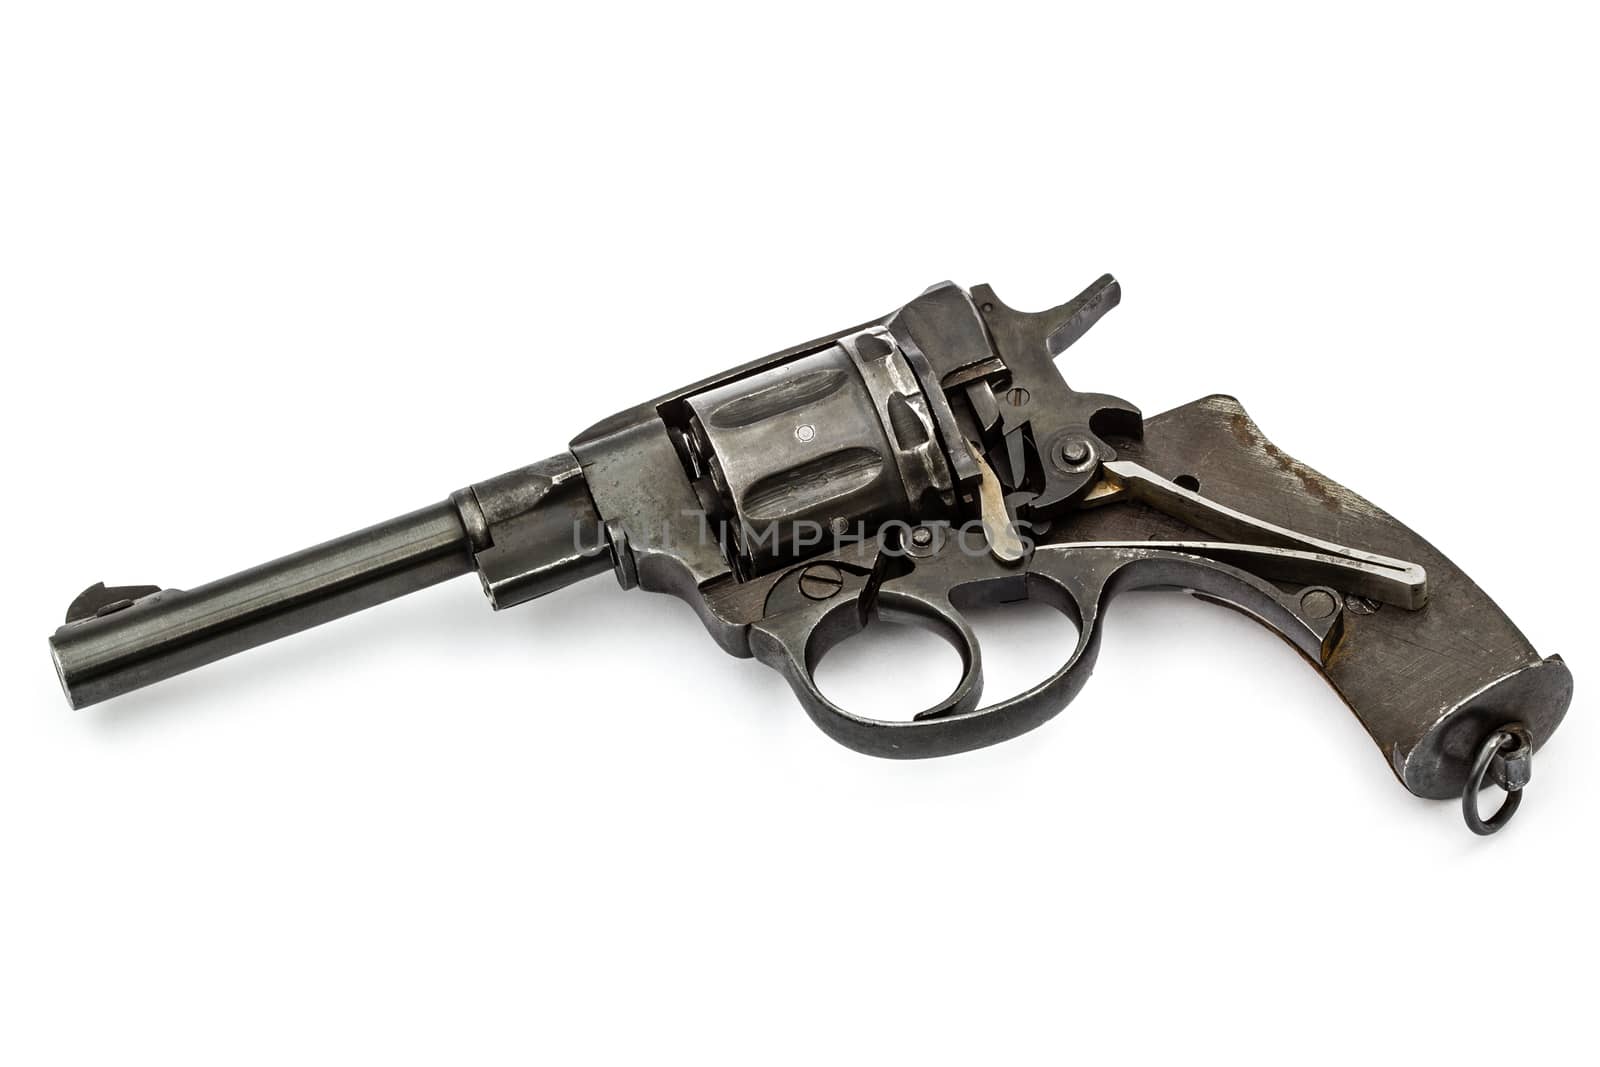 Disassembled revolver, pistol mechanism, isolated on white backg by kostiuchenko